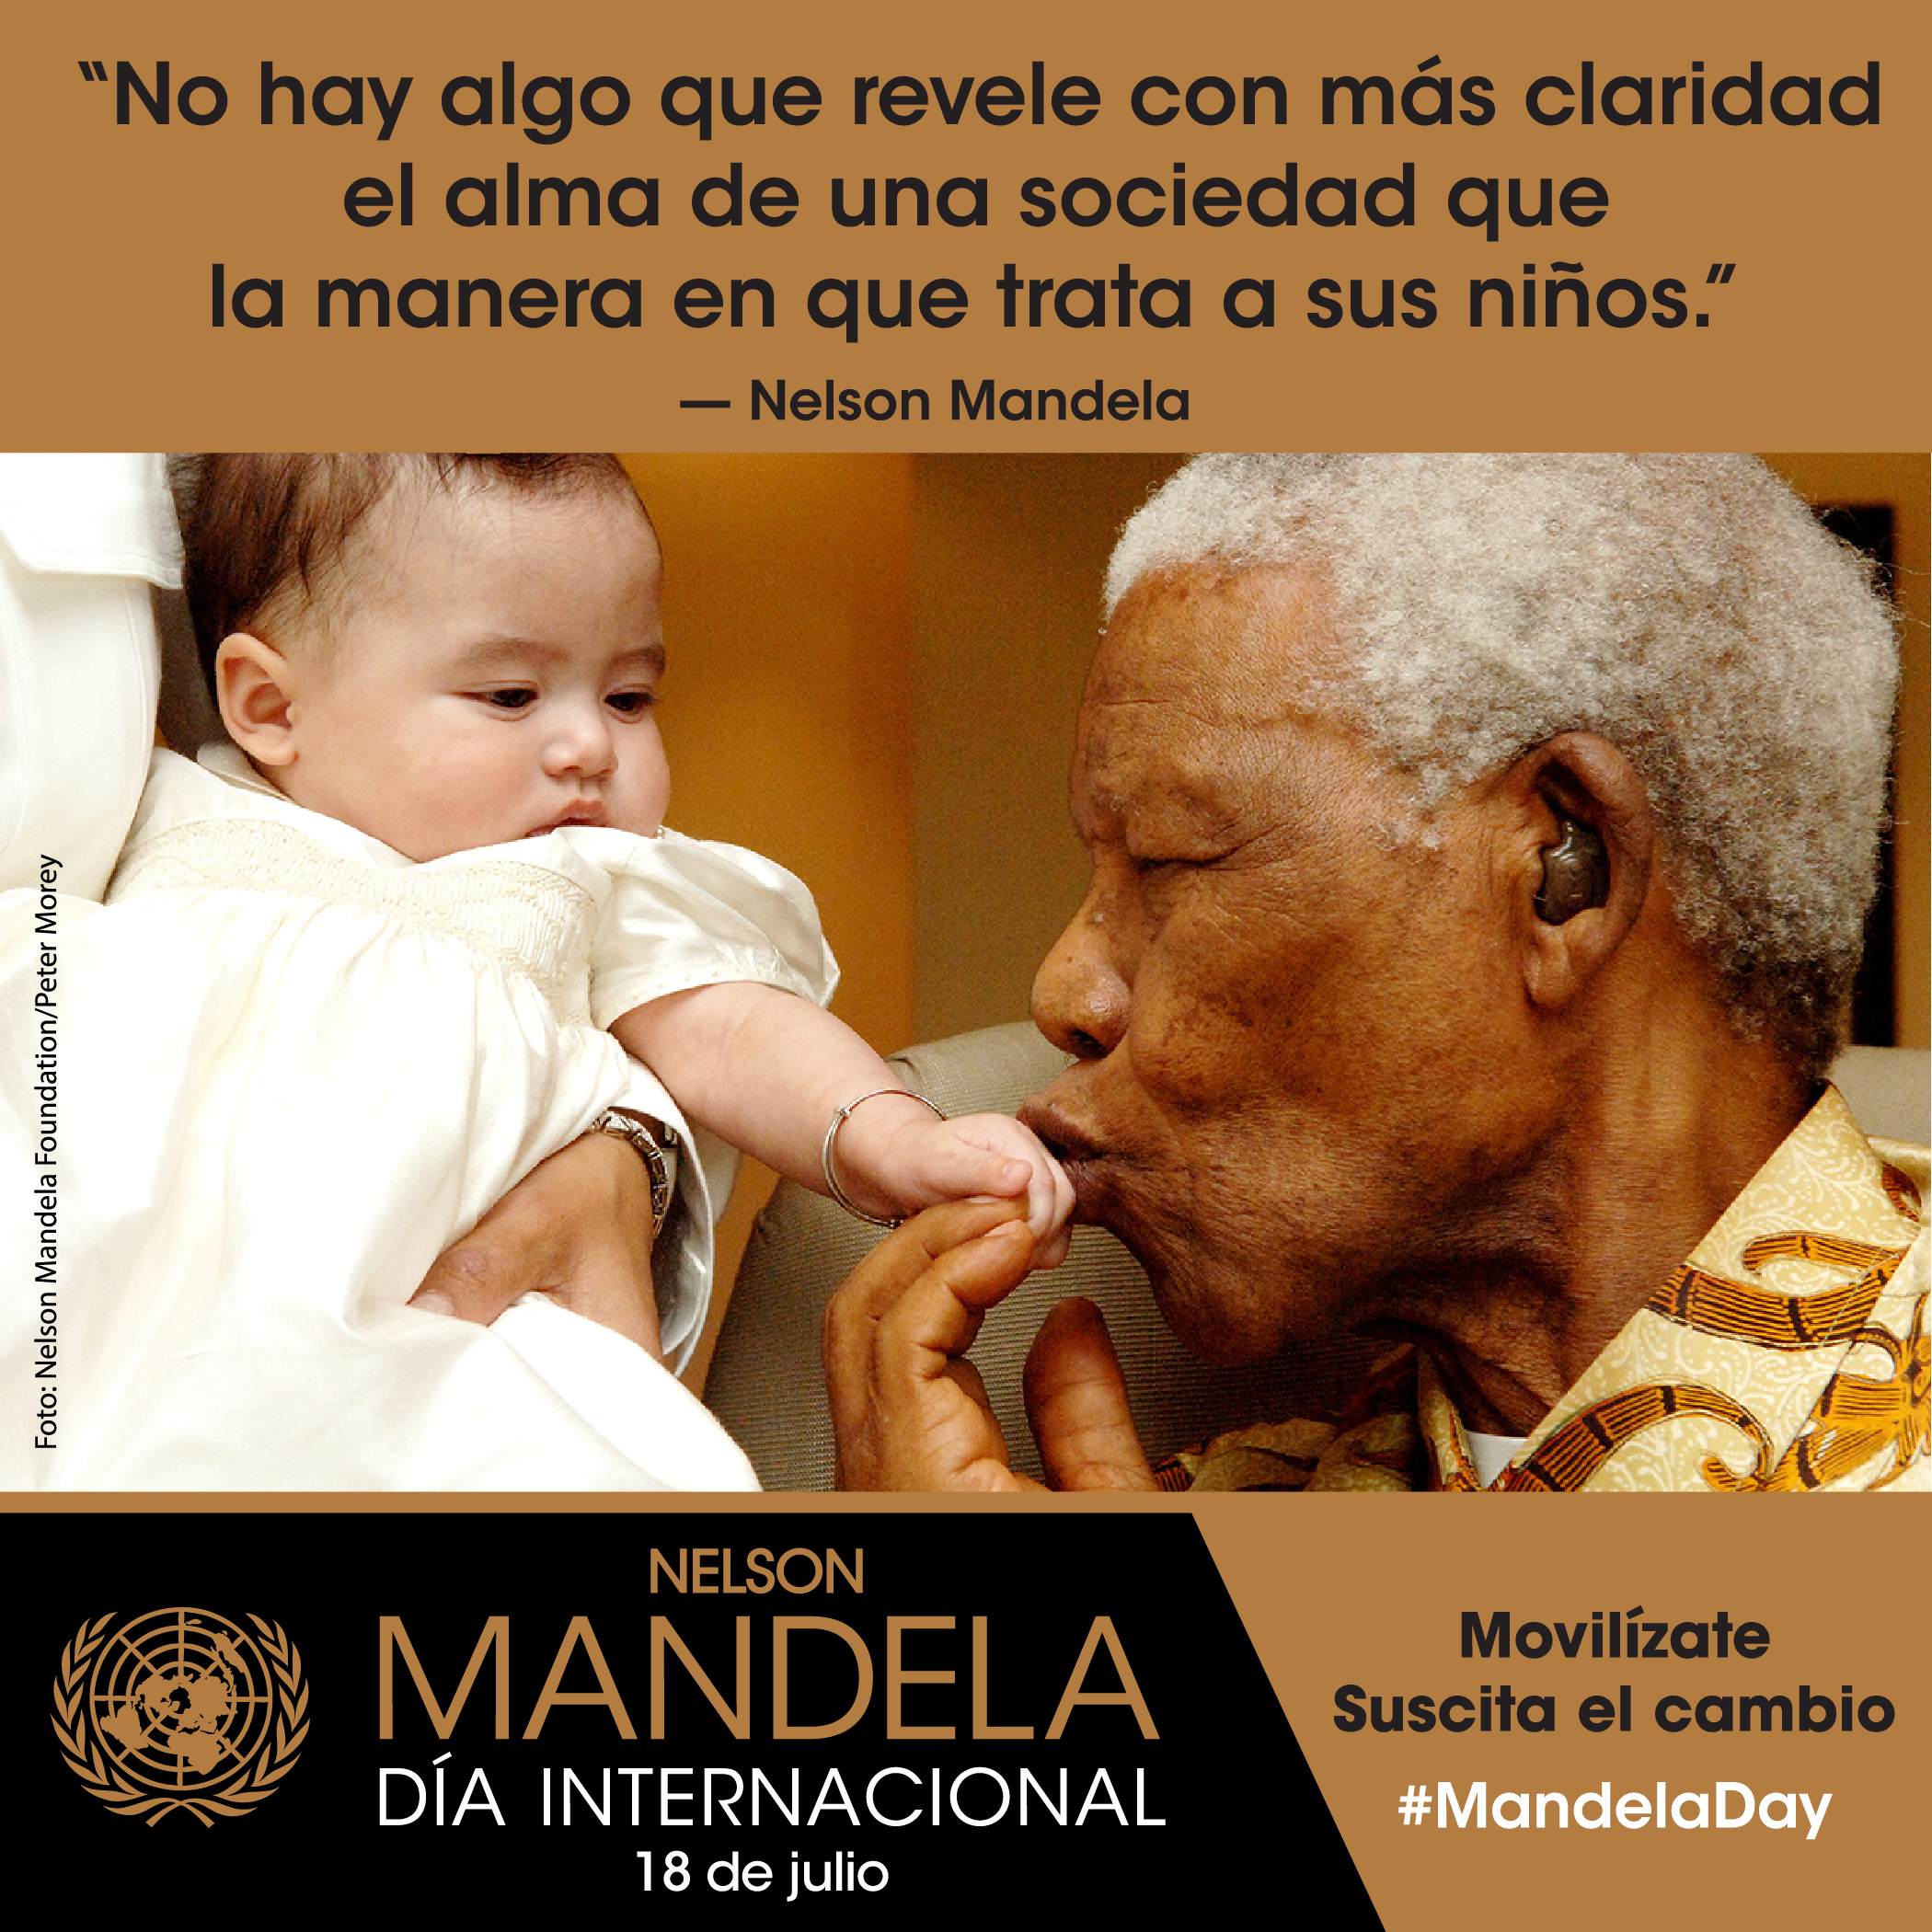  Día Internacional de Nelson Mandela, 18 de julio  Nelson_Mandela_Day_2019_children-SP